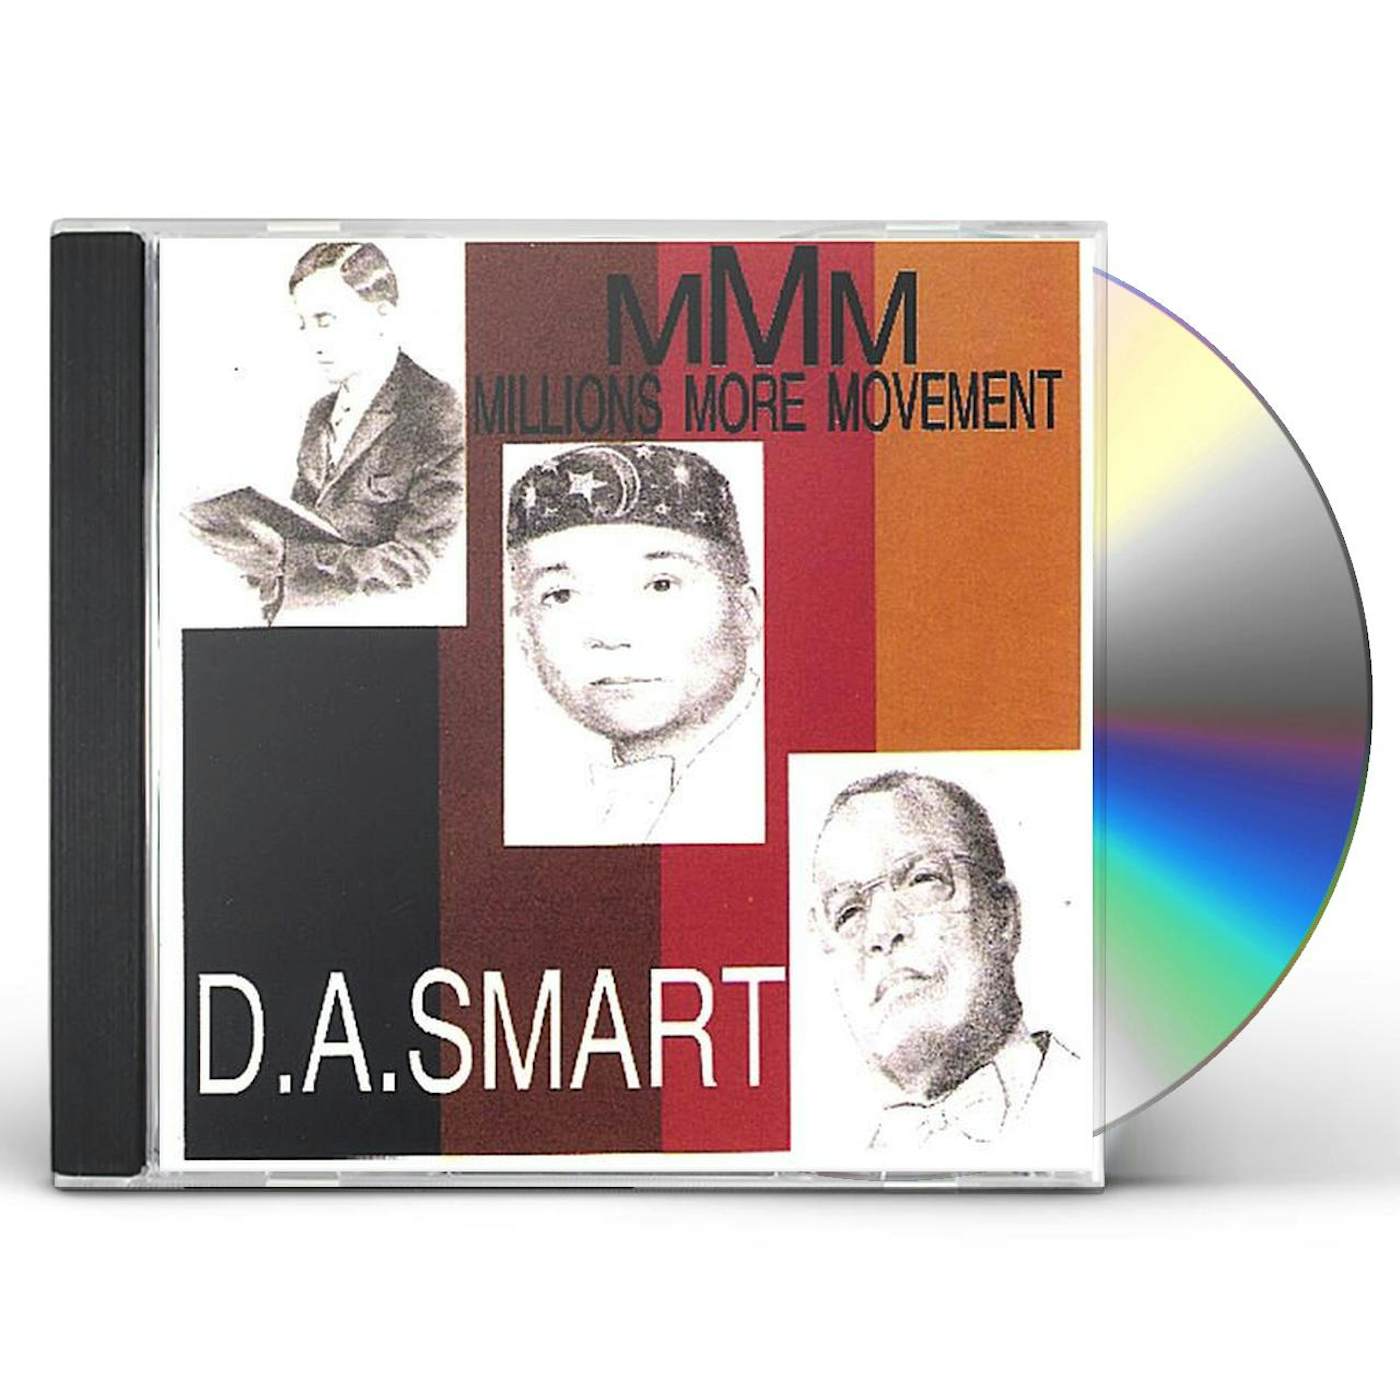 D A Smart MILLIONS MORE MOVEMENT CD